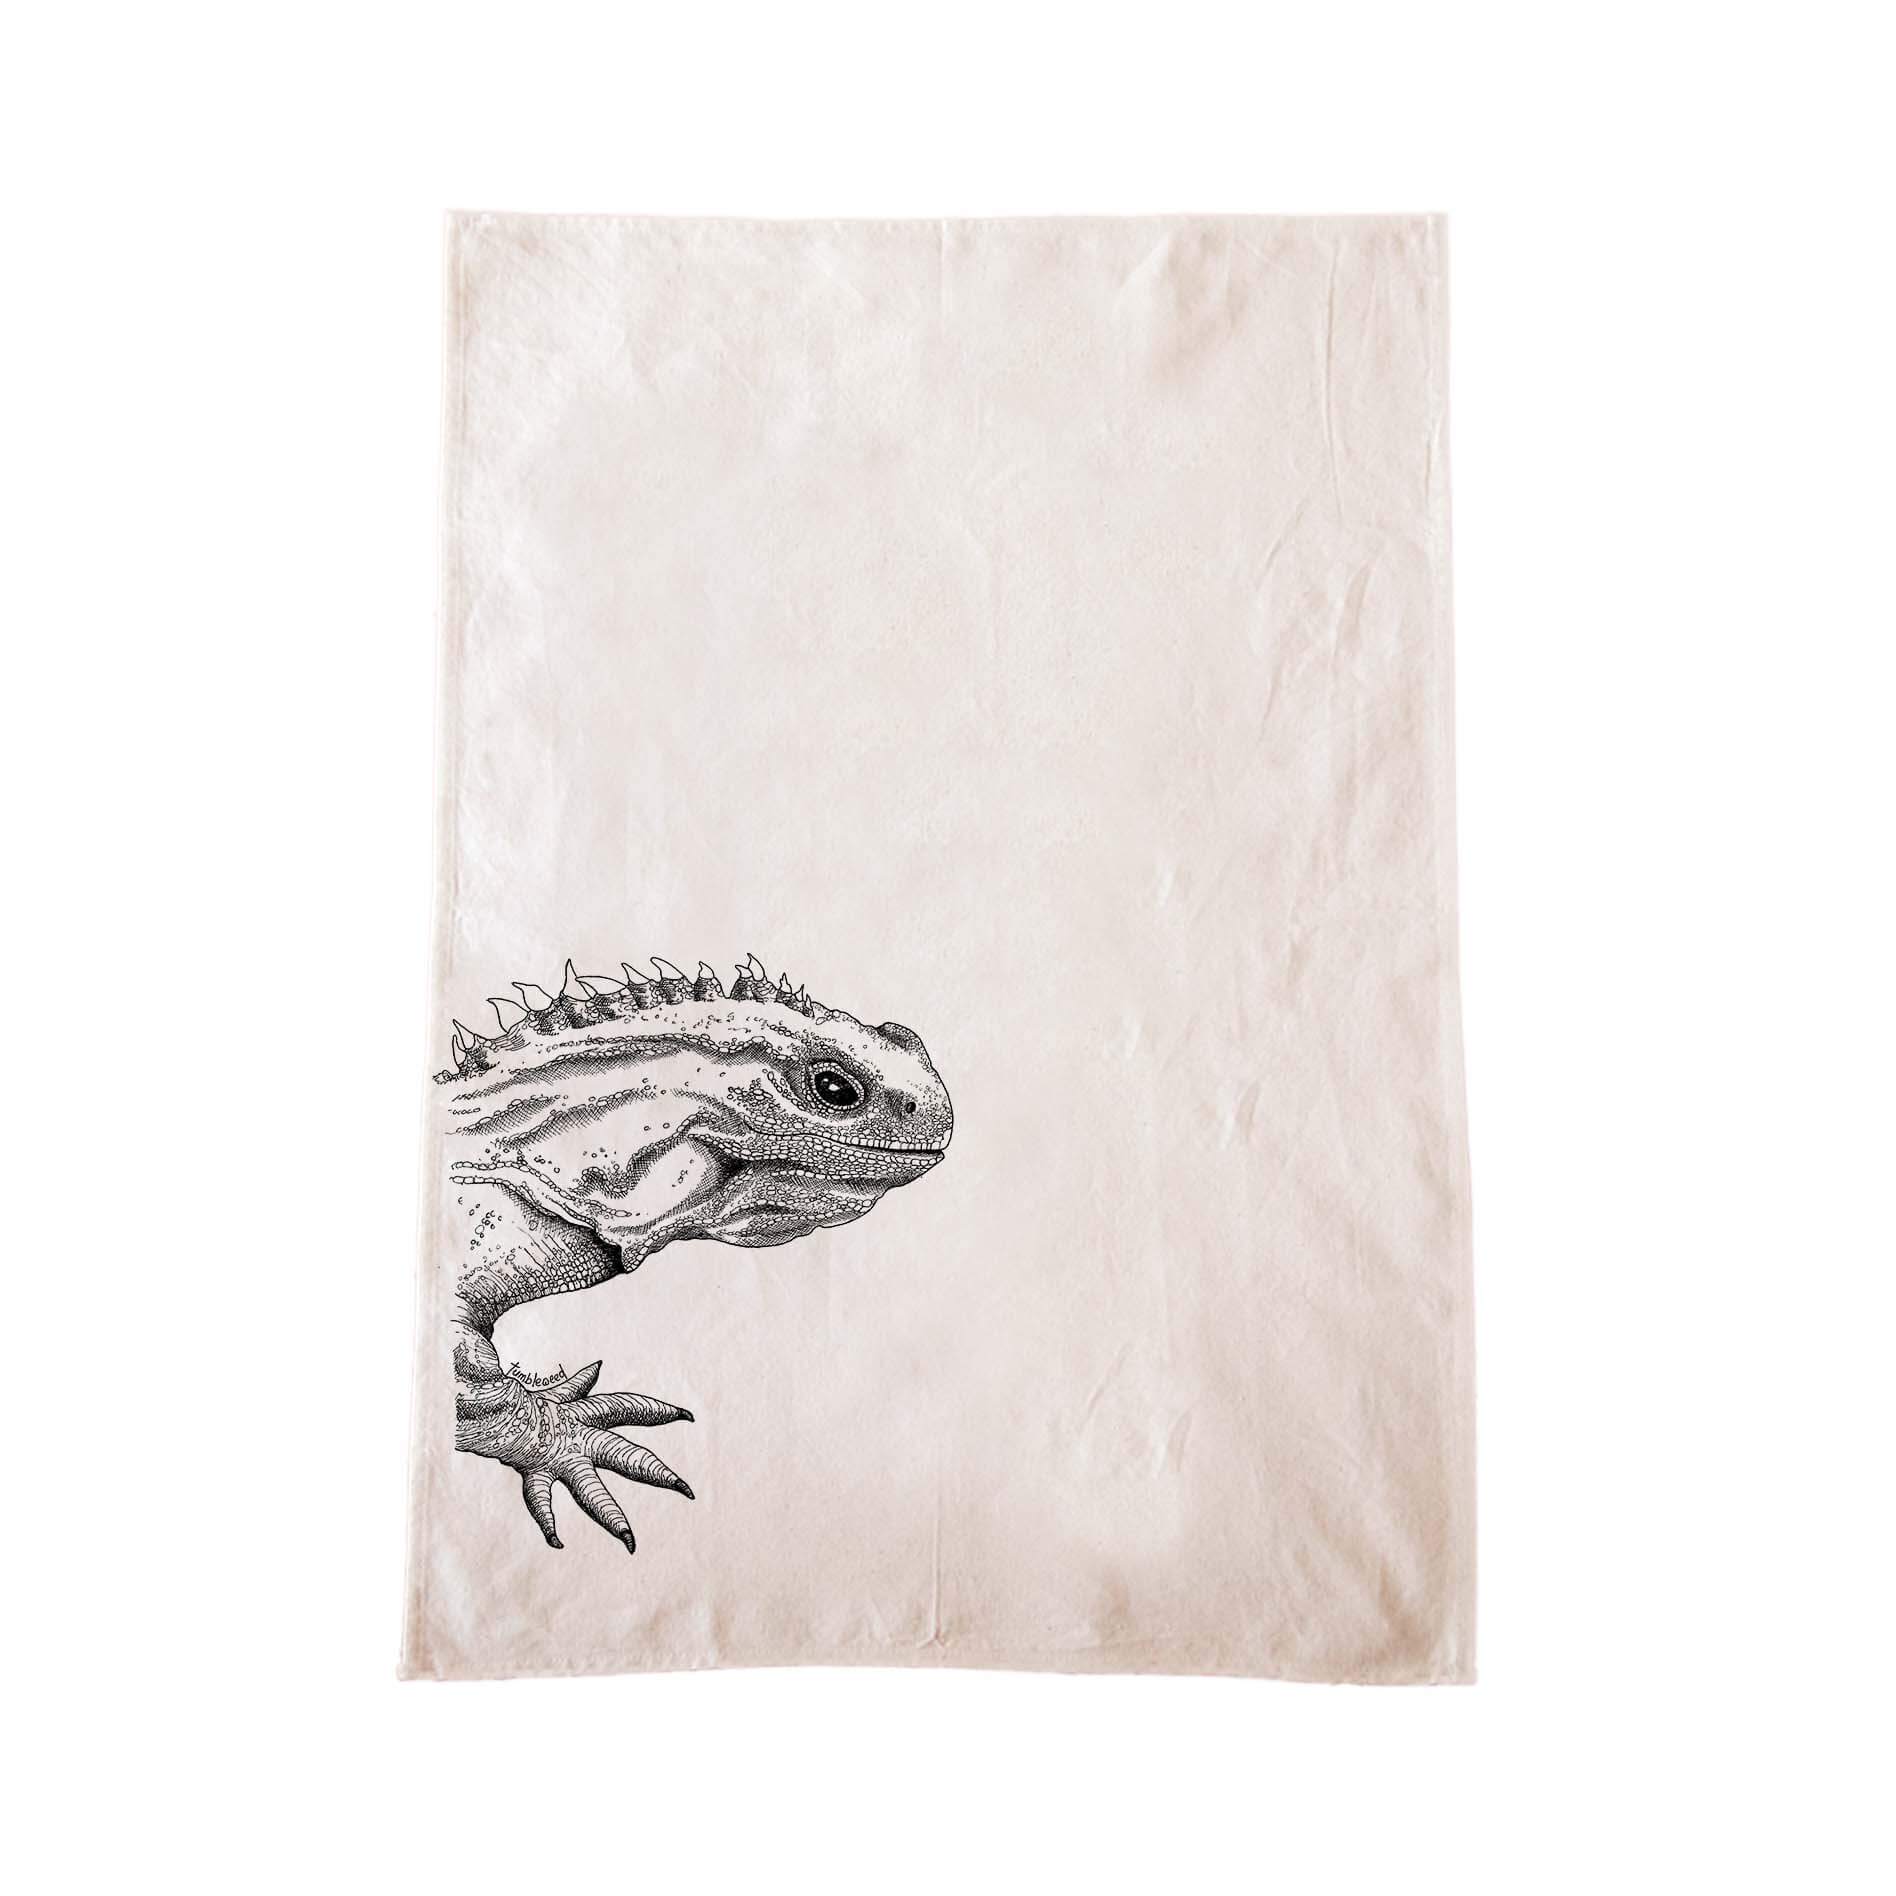 Off-white cotton tea towel with a screen printed Tuatara design.